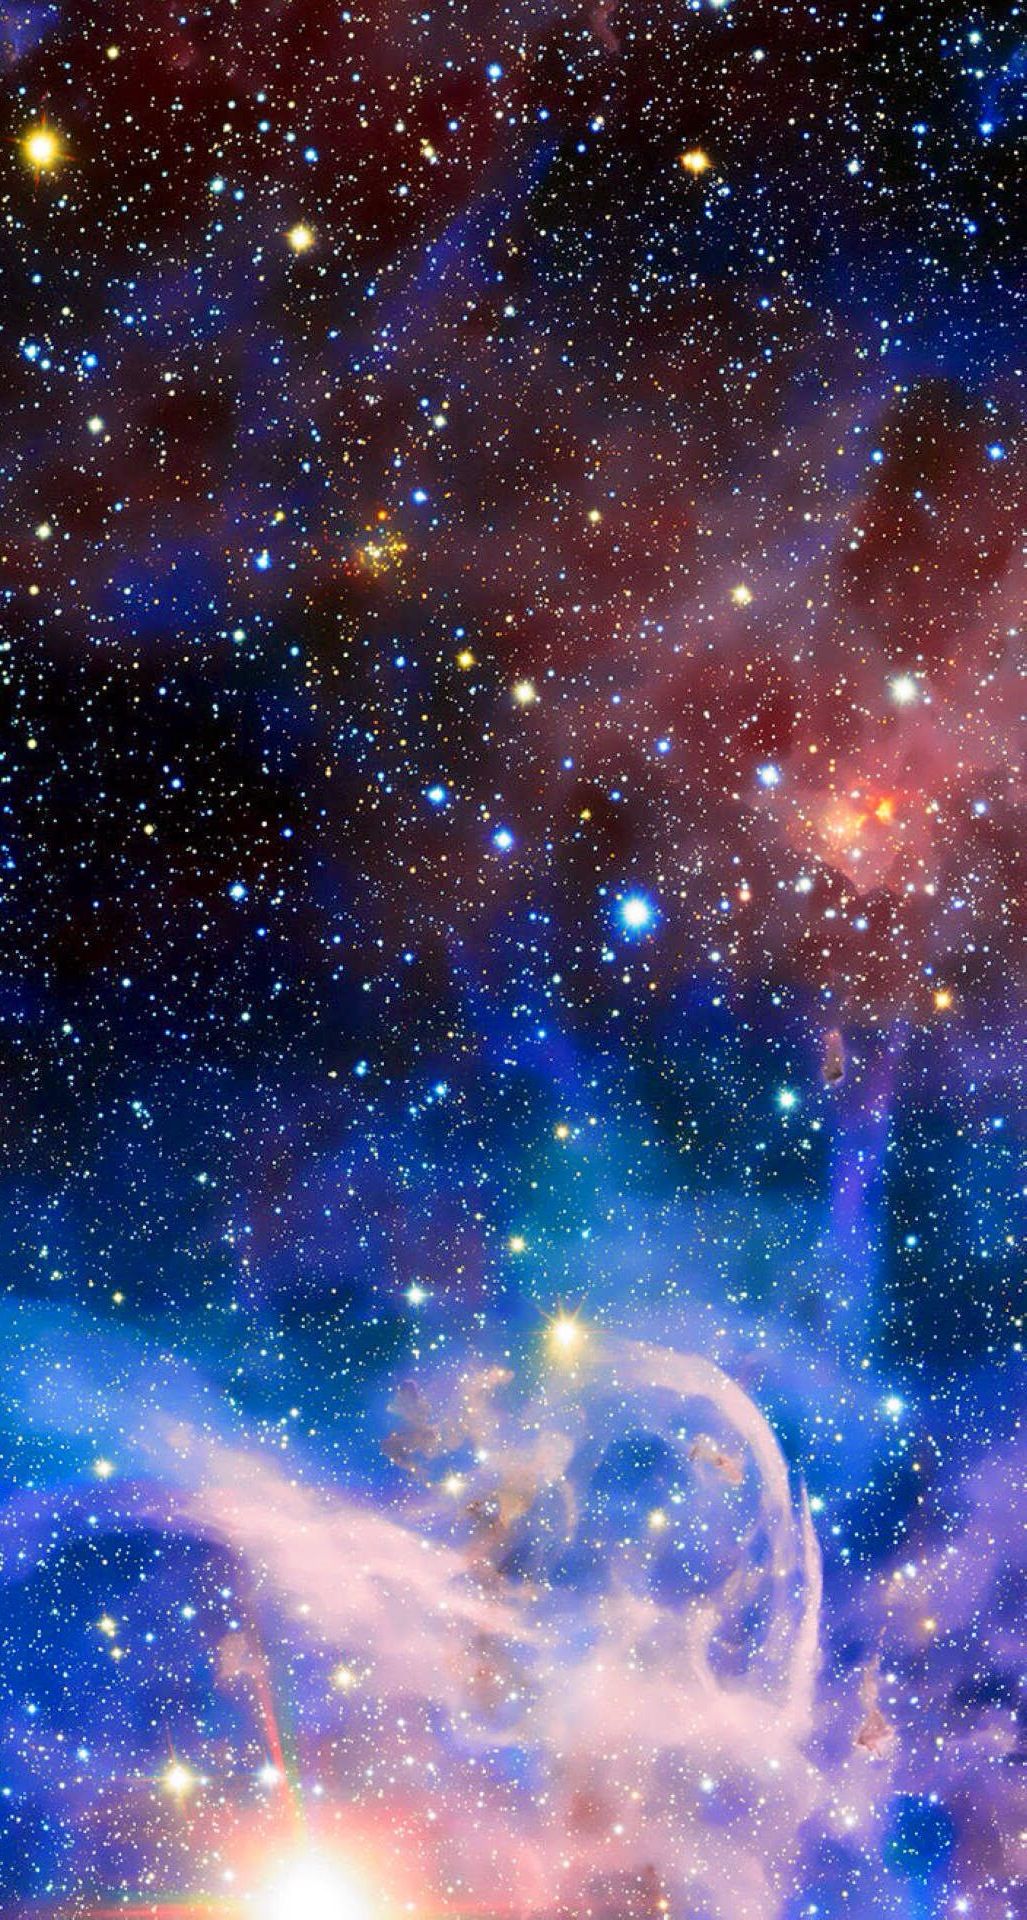 universum wallpaper iphone,himmel,weltraum,blau,astronomisches objekt,atmosphäre